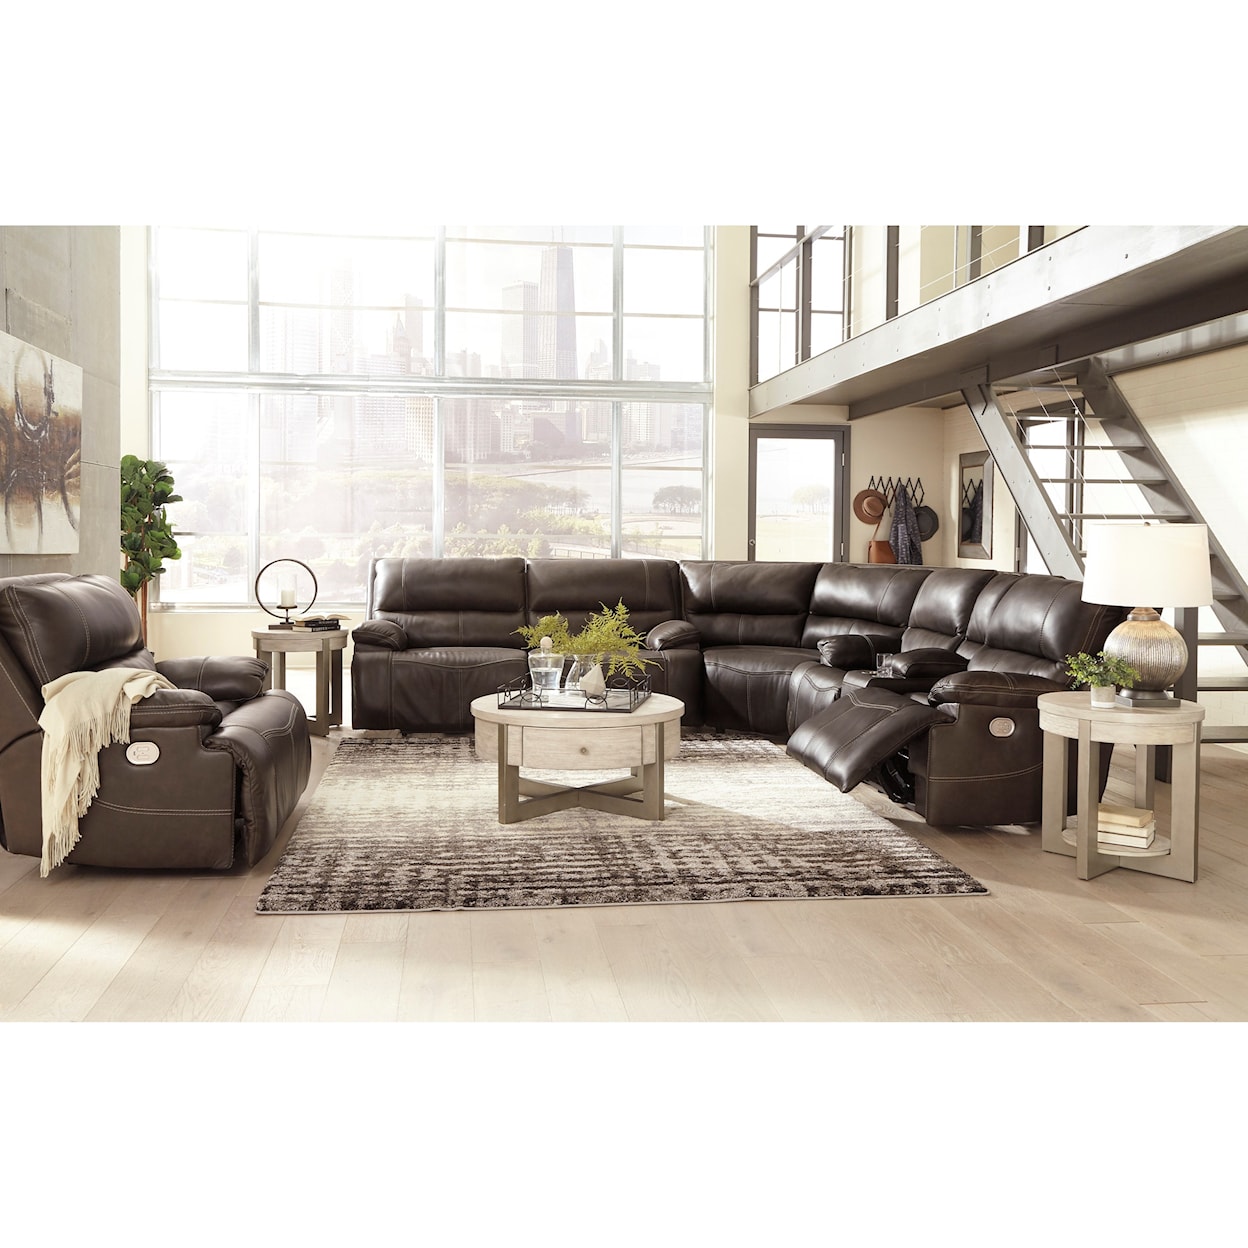 Ashley Furniture Signature Design Ricmen Power Reclining Living Room Group